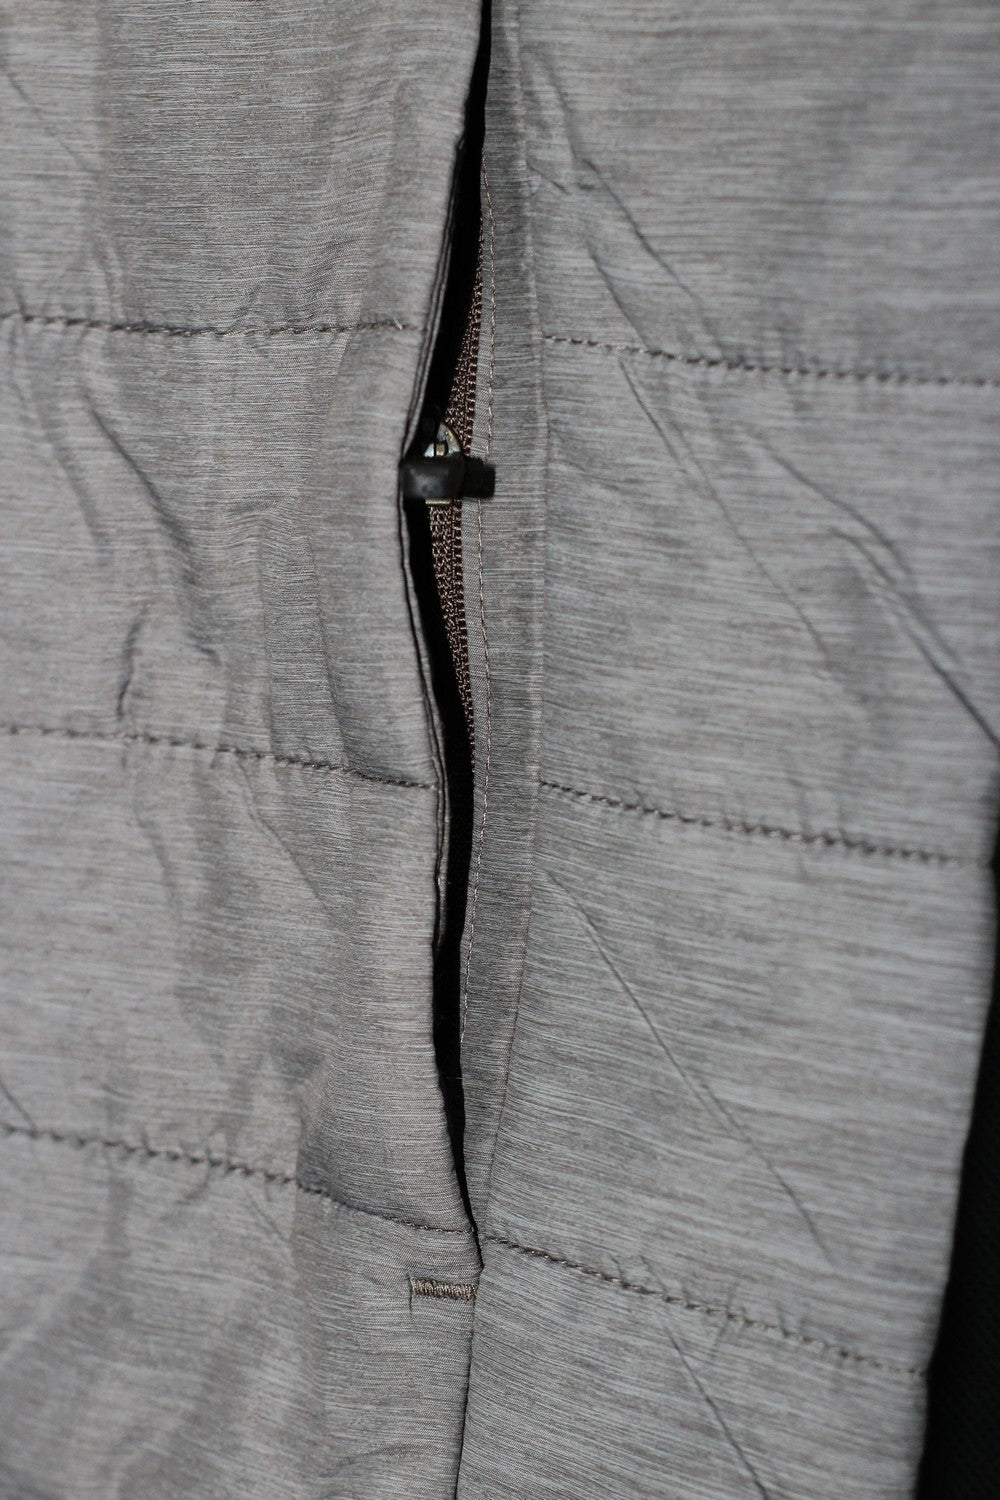 Marmot Branded Original For Men Puffer Vest Jacket